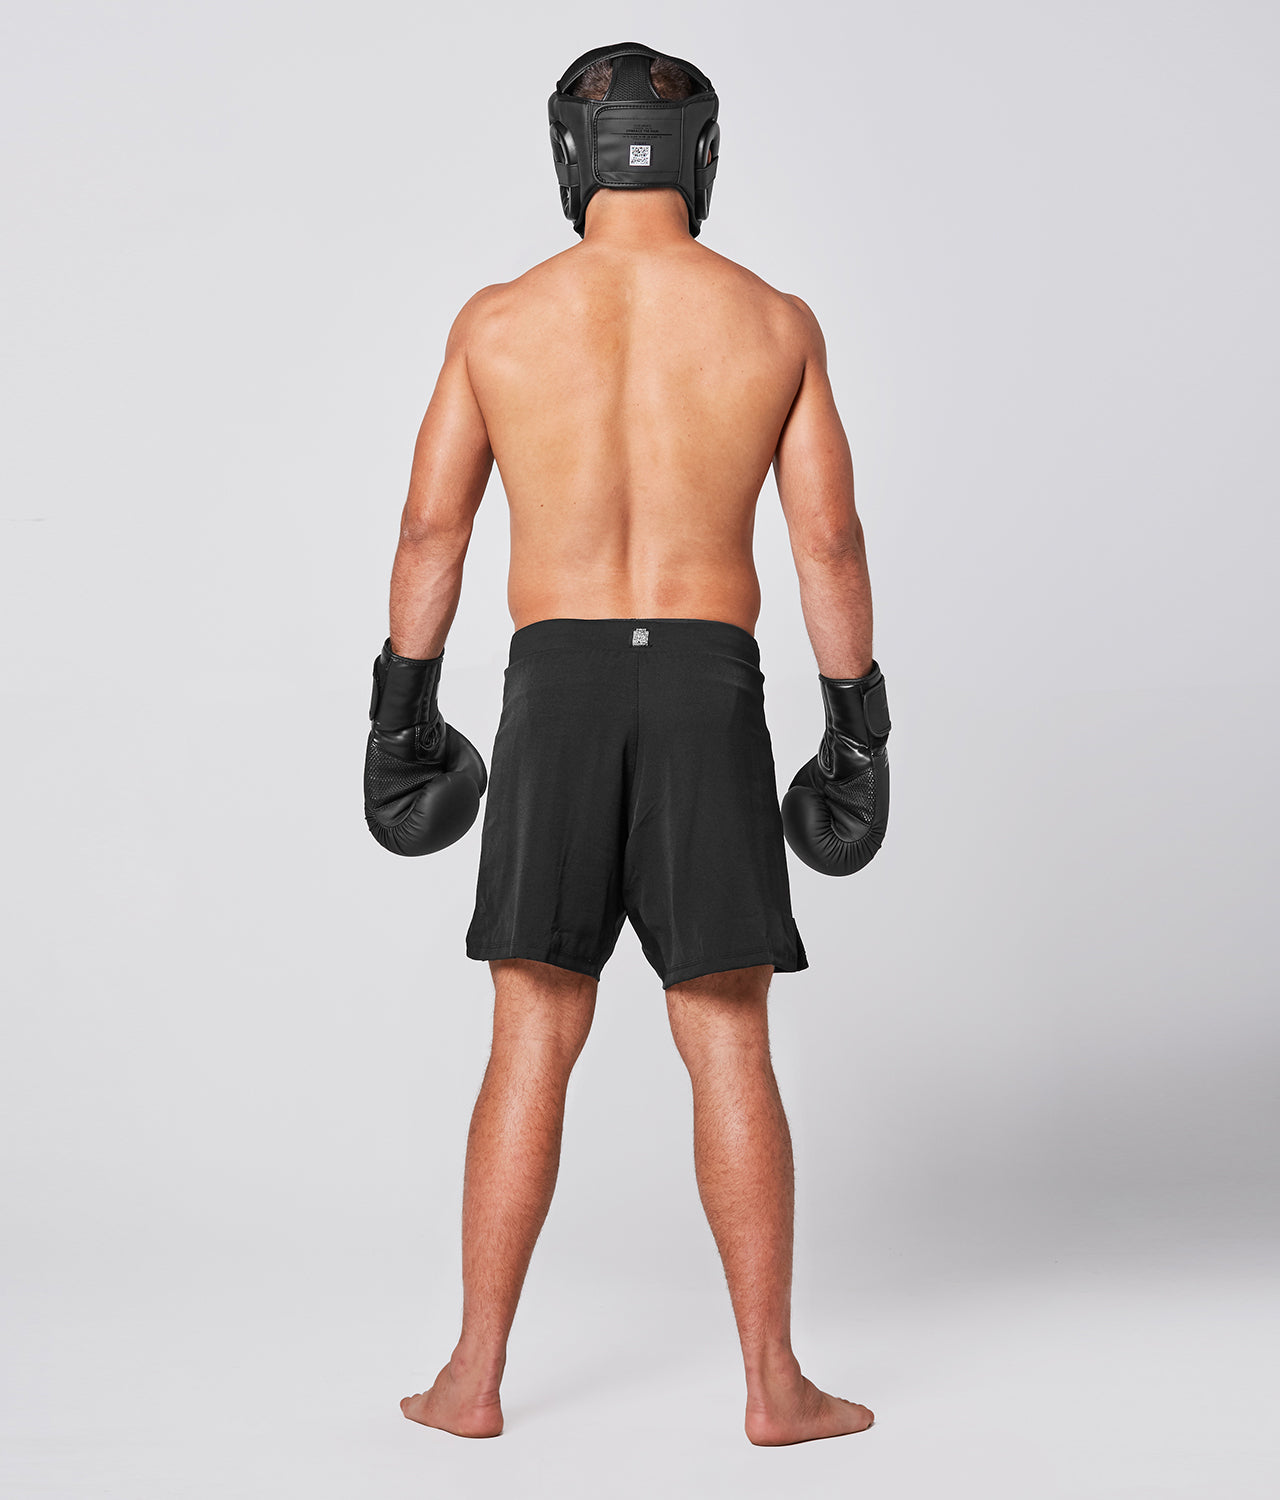 Elite Sports Adults' Black/Black Muay Thai Headgear Back View